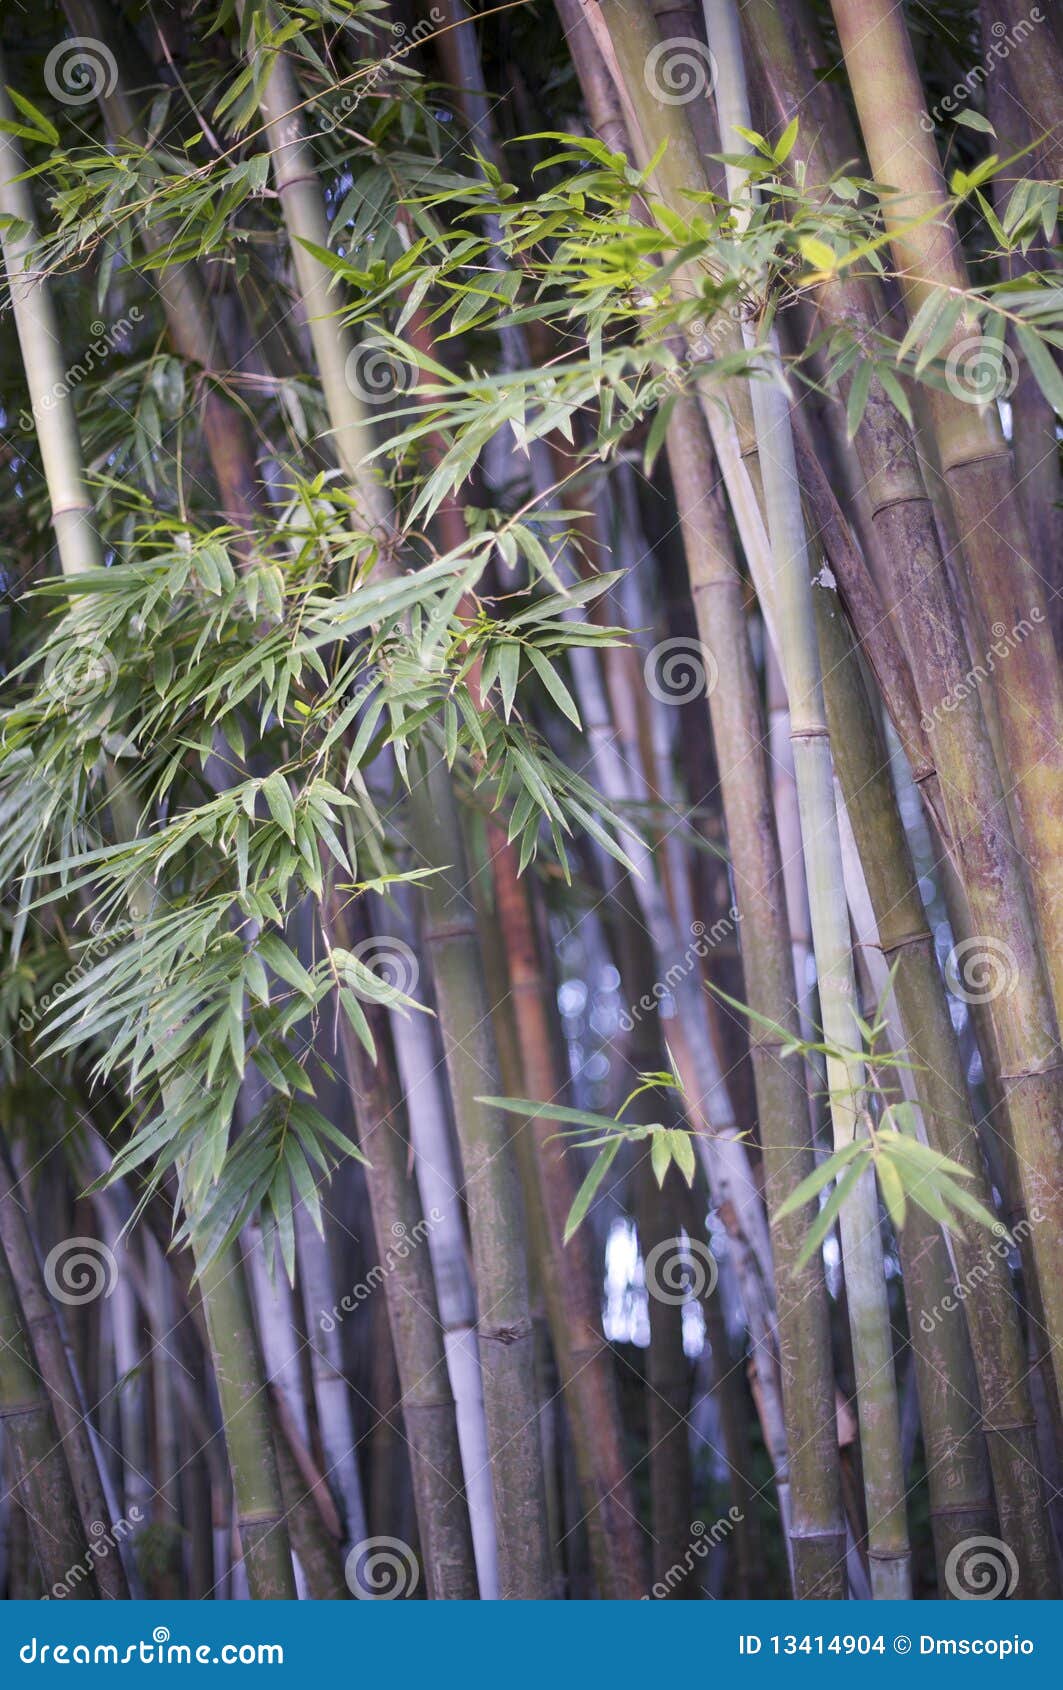 bamboo, zen tropical ambiance